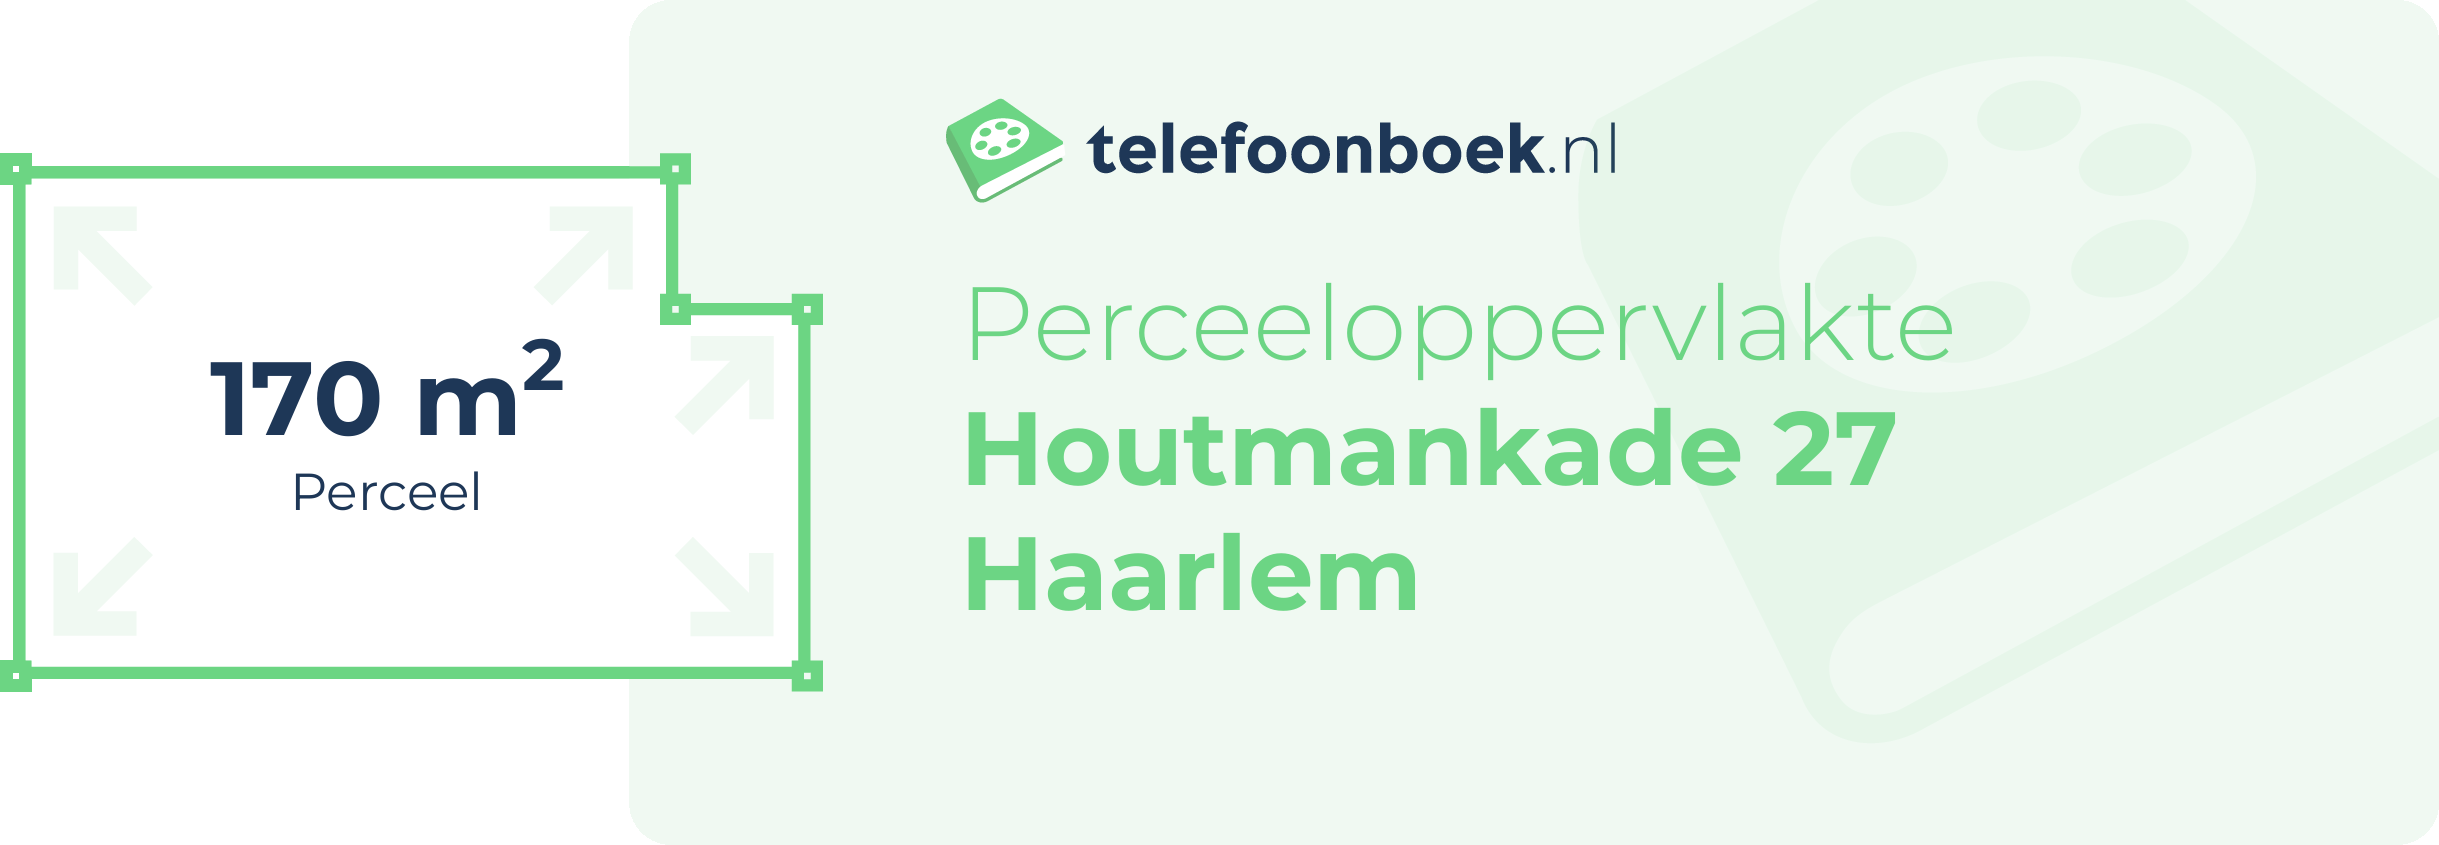 Perceeloppervlakte Houtmankade 27 Haarlem